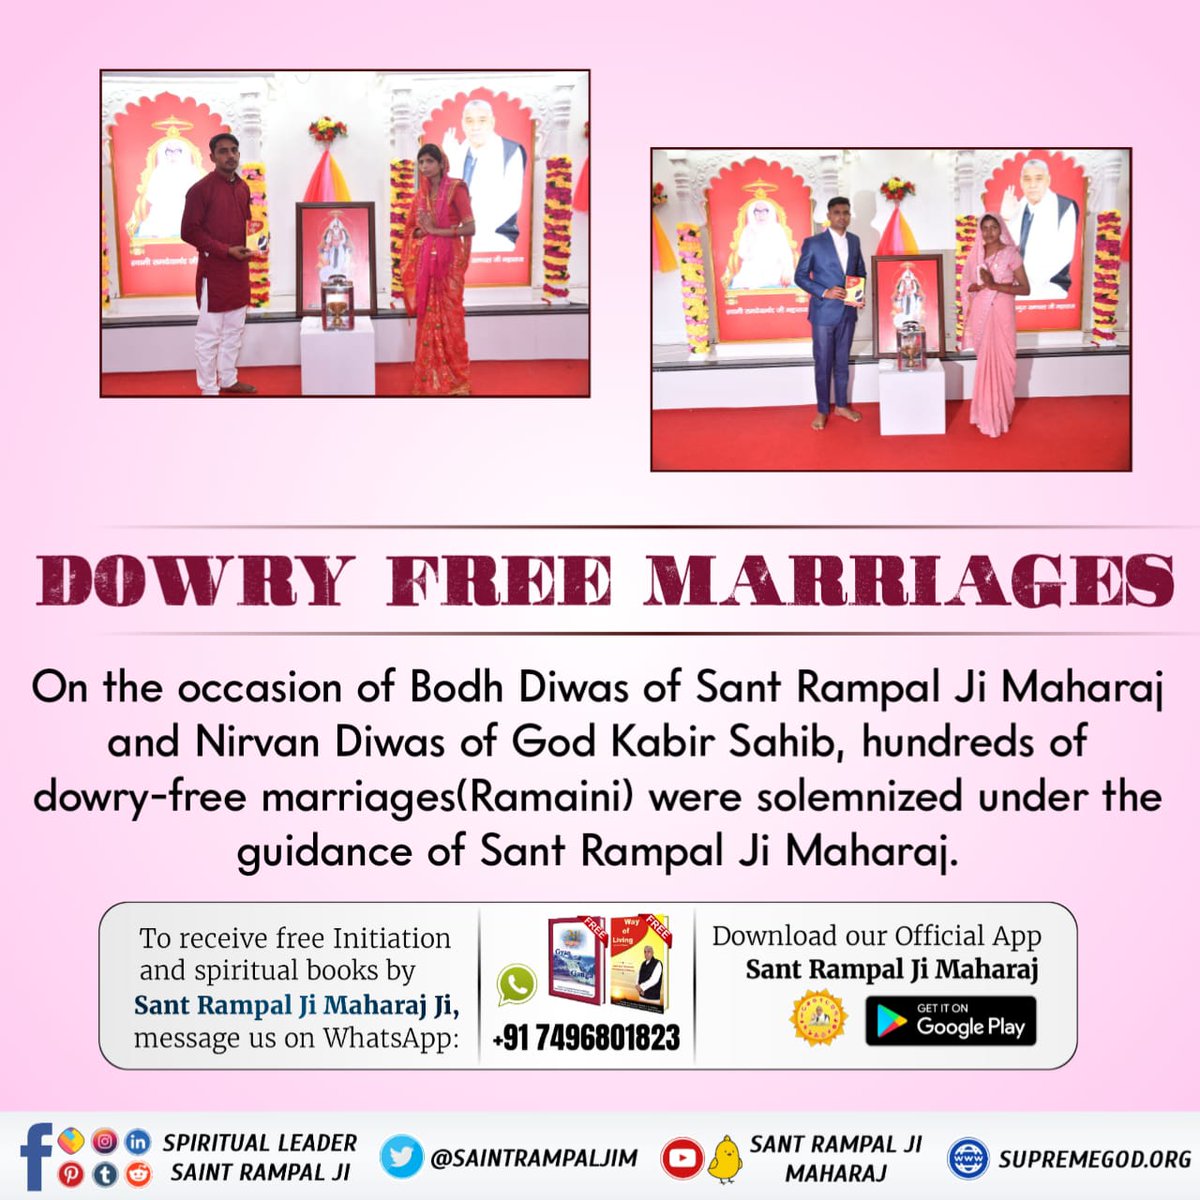 #DowryFreeMarriages
#dowryfreeindia
Supreme God Kabir
#सत्य_भक्ति_सन्देश 
दहेज मुक्त भारत
नशा मुक्त भारत